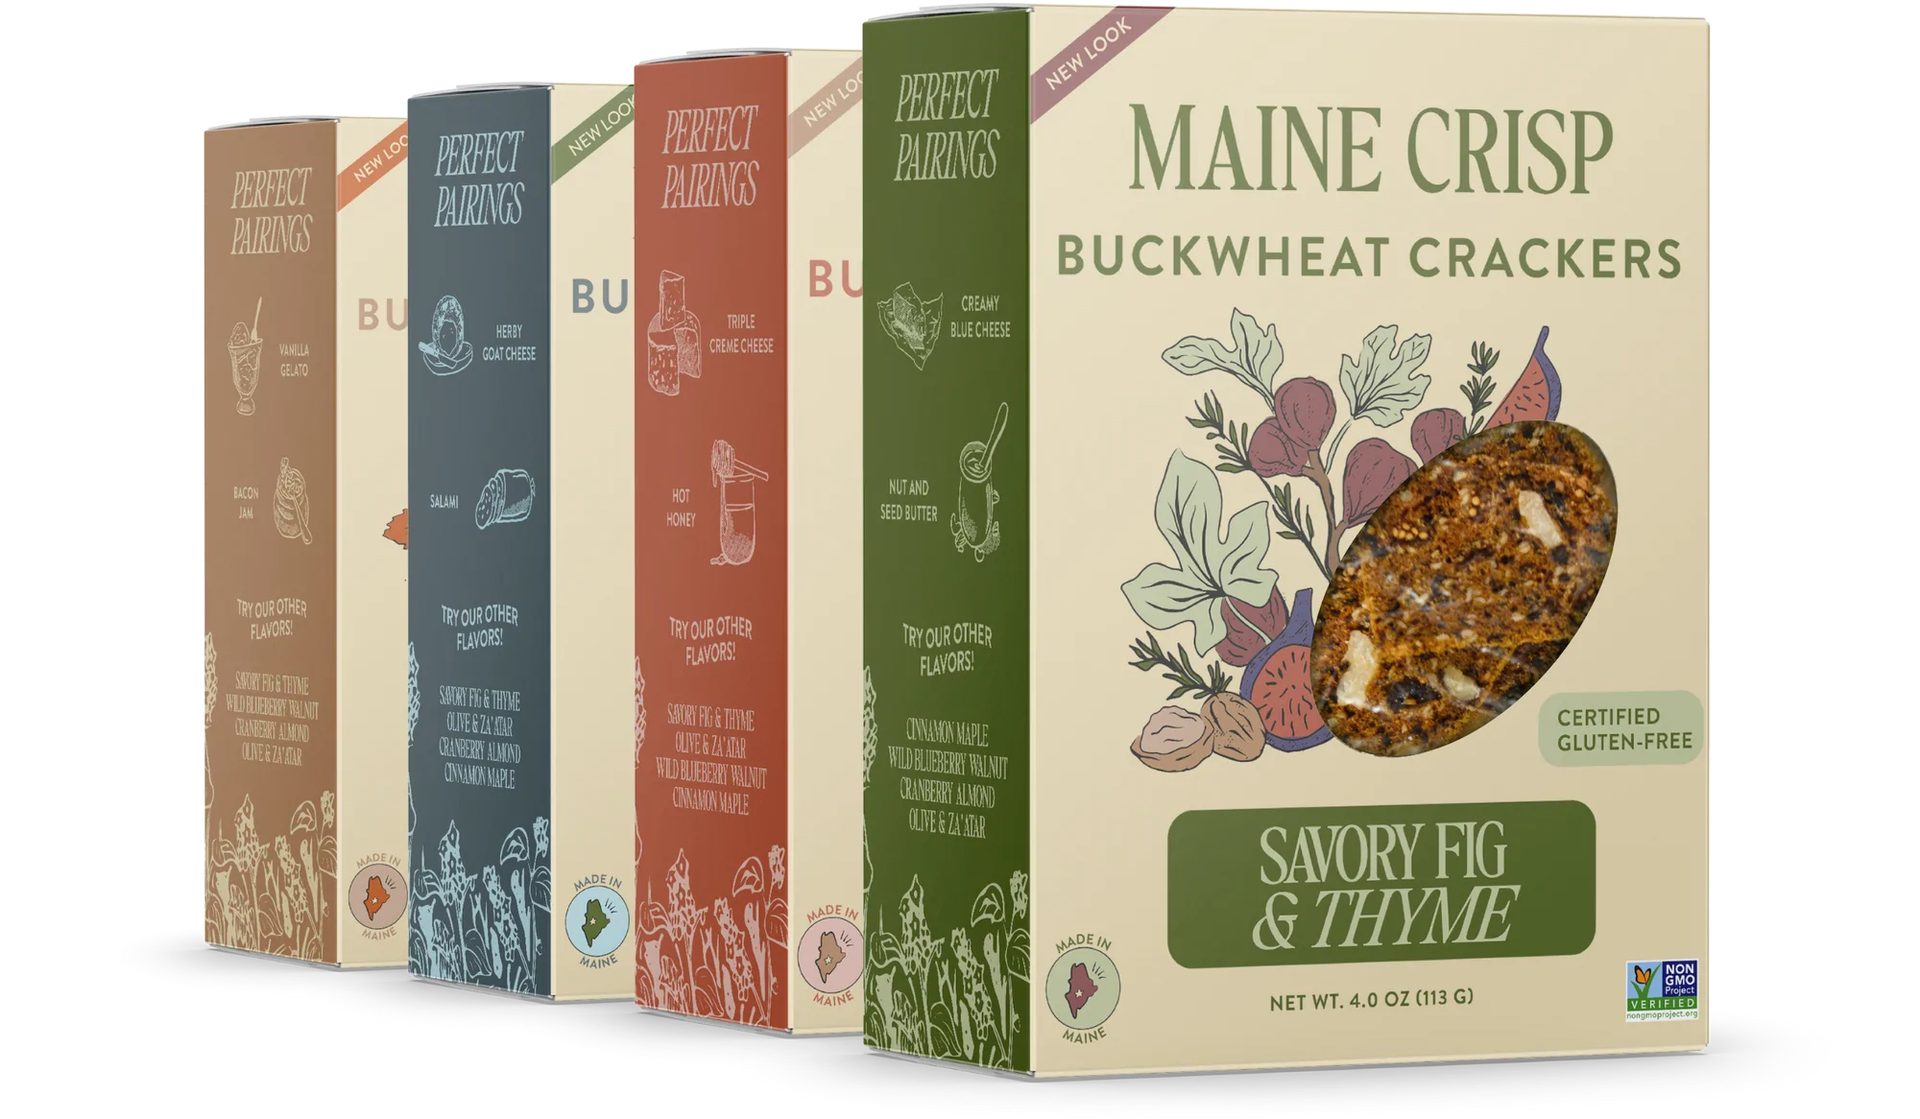 Maine Crisp Buckwheat Crackers product line